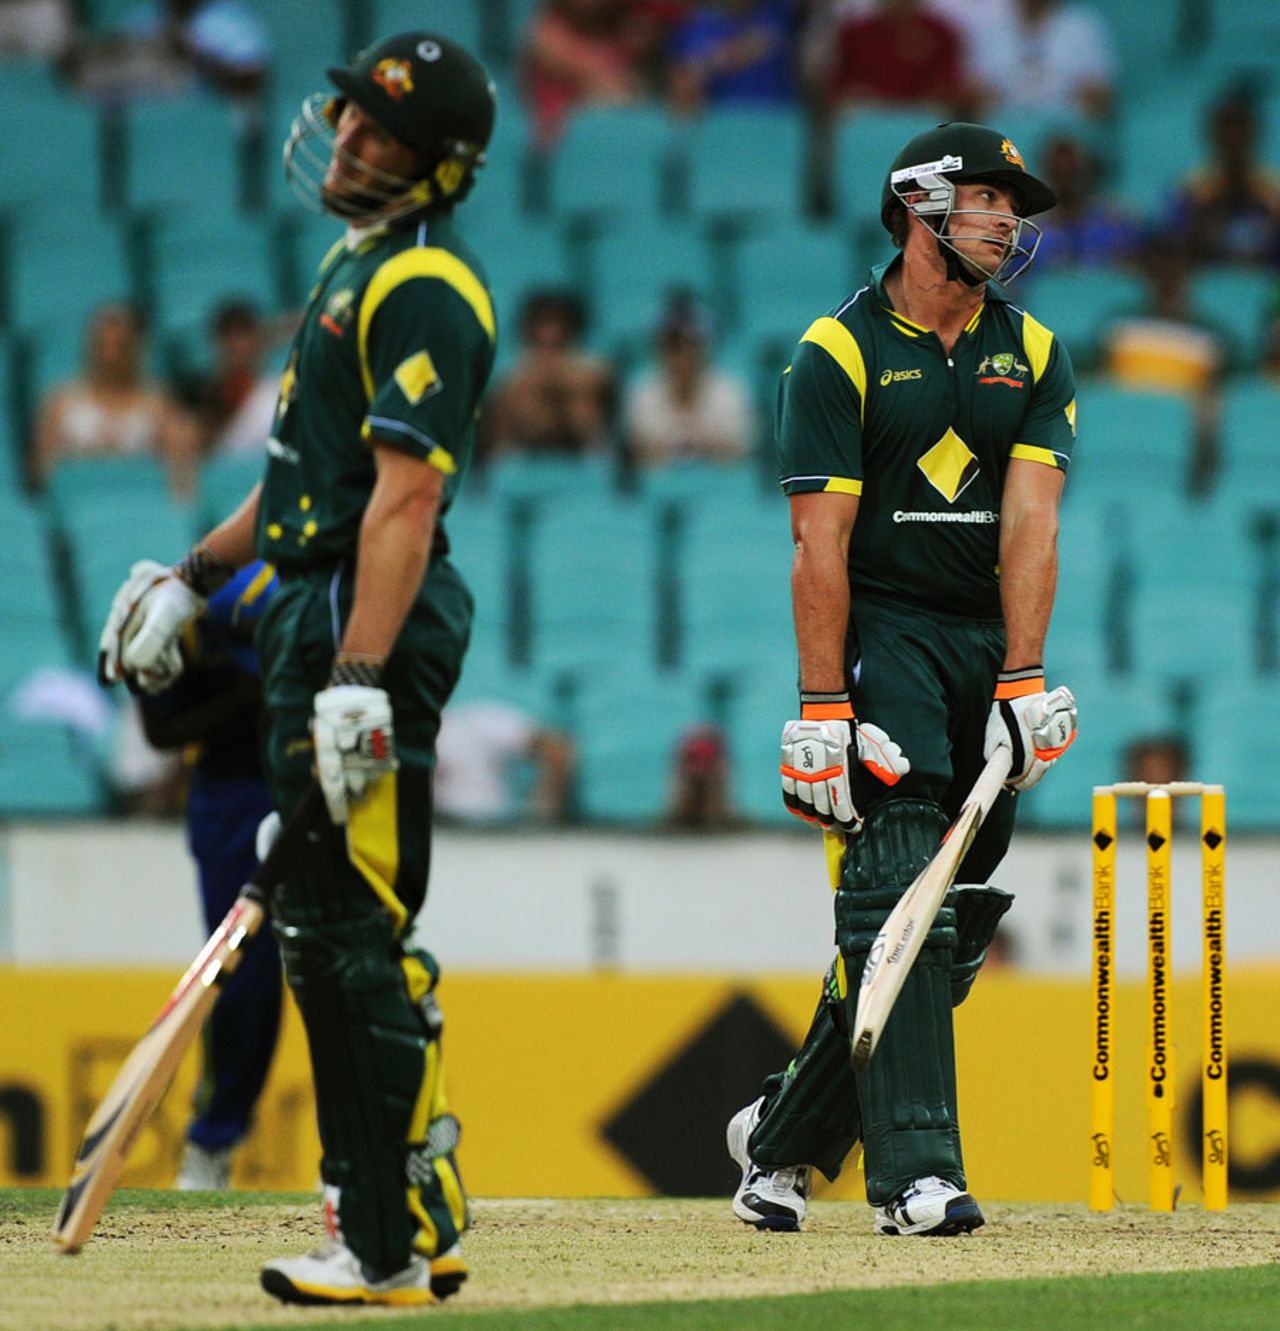 David Hussey and Peter Forrest are forlorn after the latter's dismissal, Australia v Sri Lanka, CB Series, Sydney, February 17, 2012